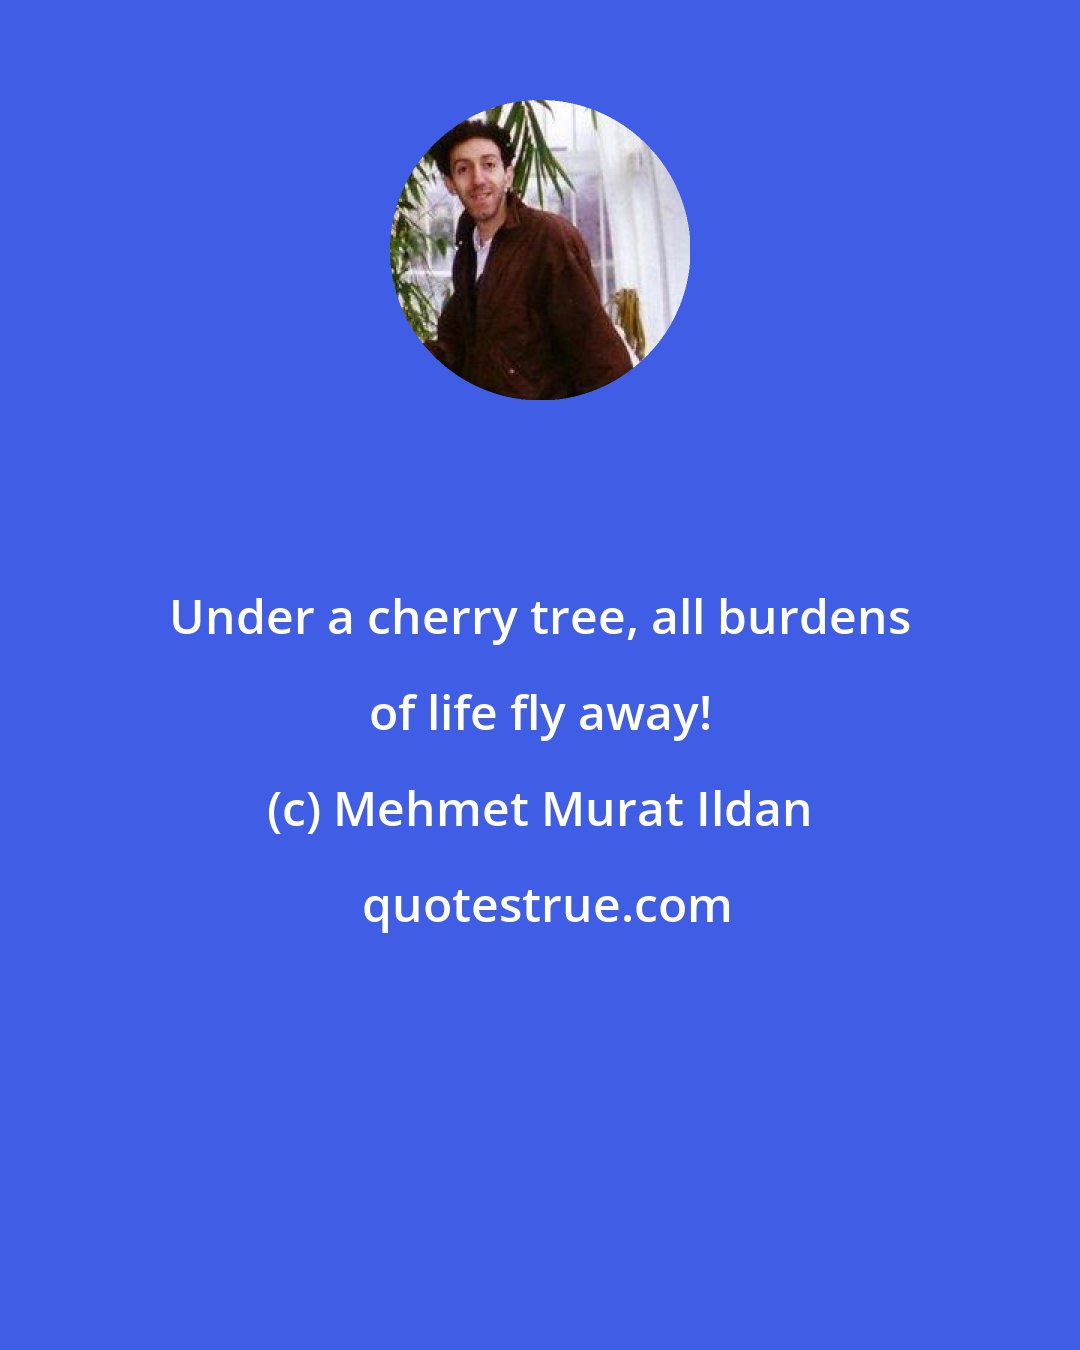 Mehmet Murat Ildan: Under a cherry tree, all burdens of life fly away!